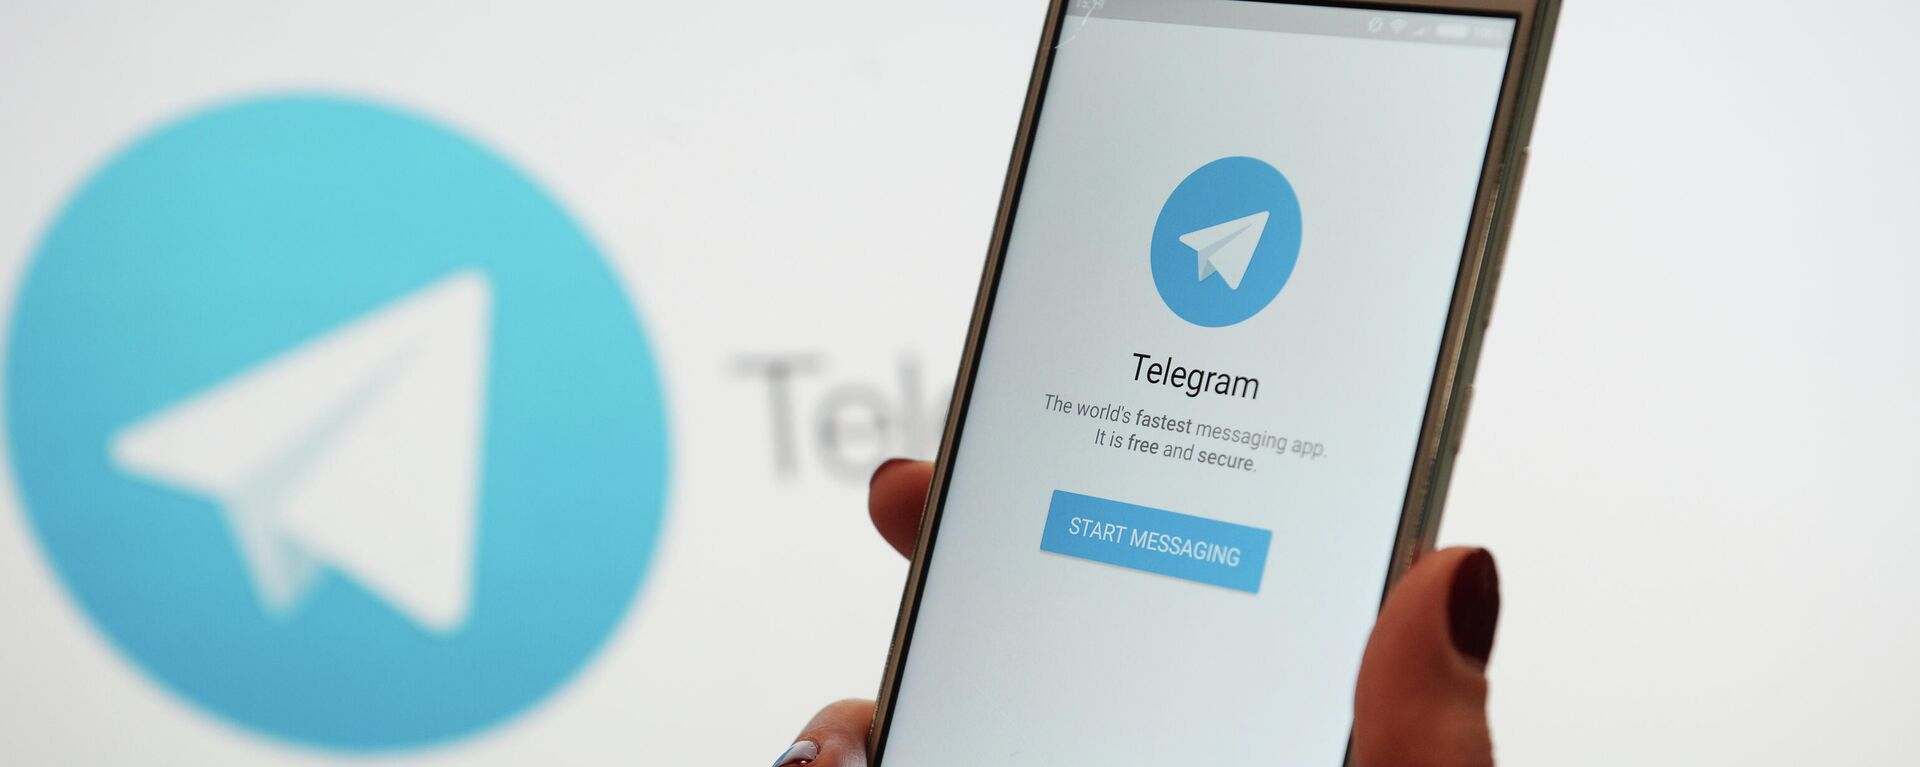 Una persona sostiene un teléfono con la 'app' Telegram en la pantalla - Sputnik Mundo, 1920, 07.03.2022